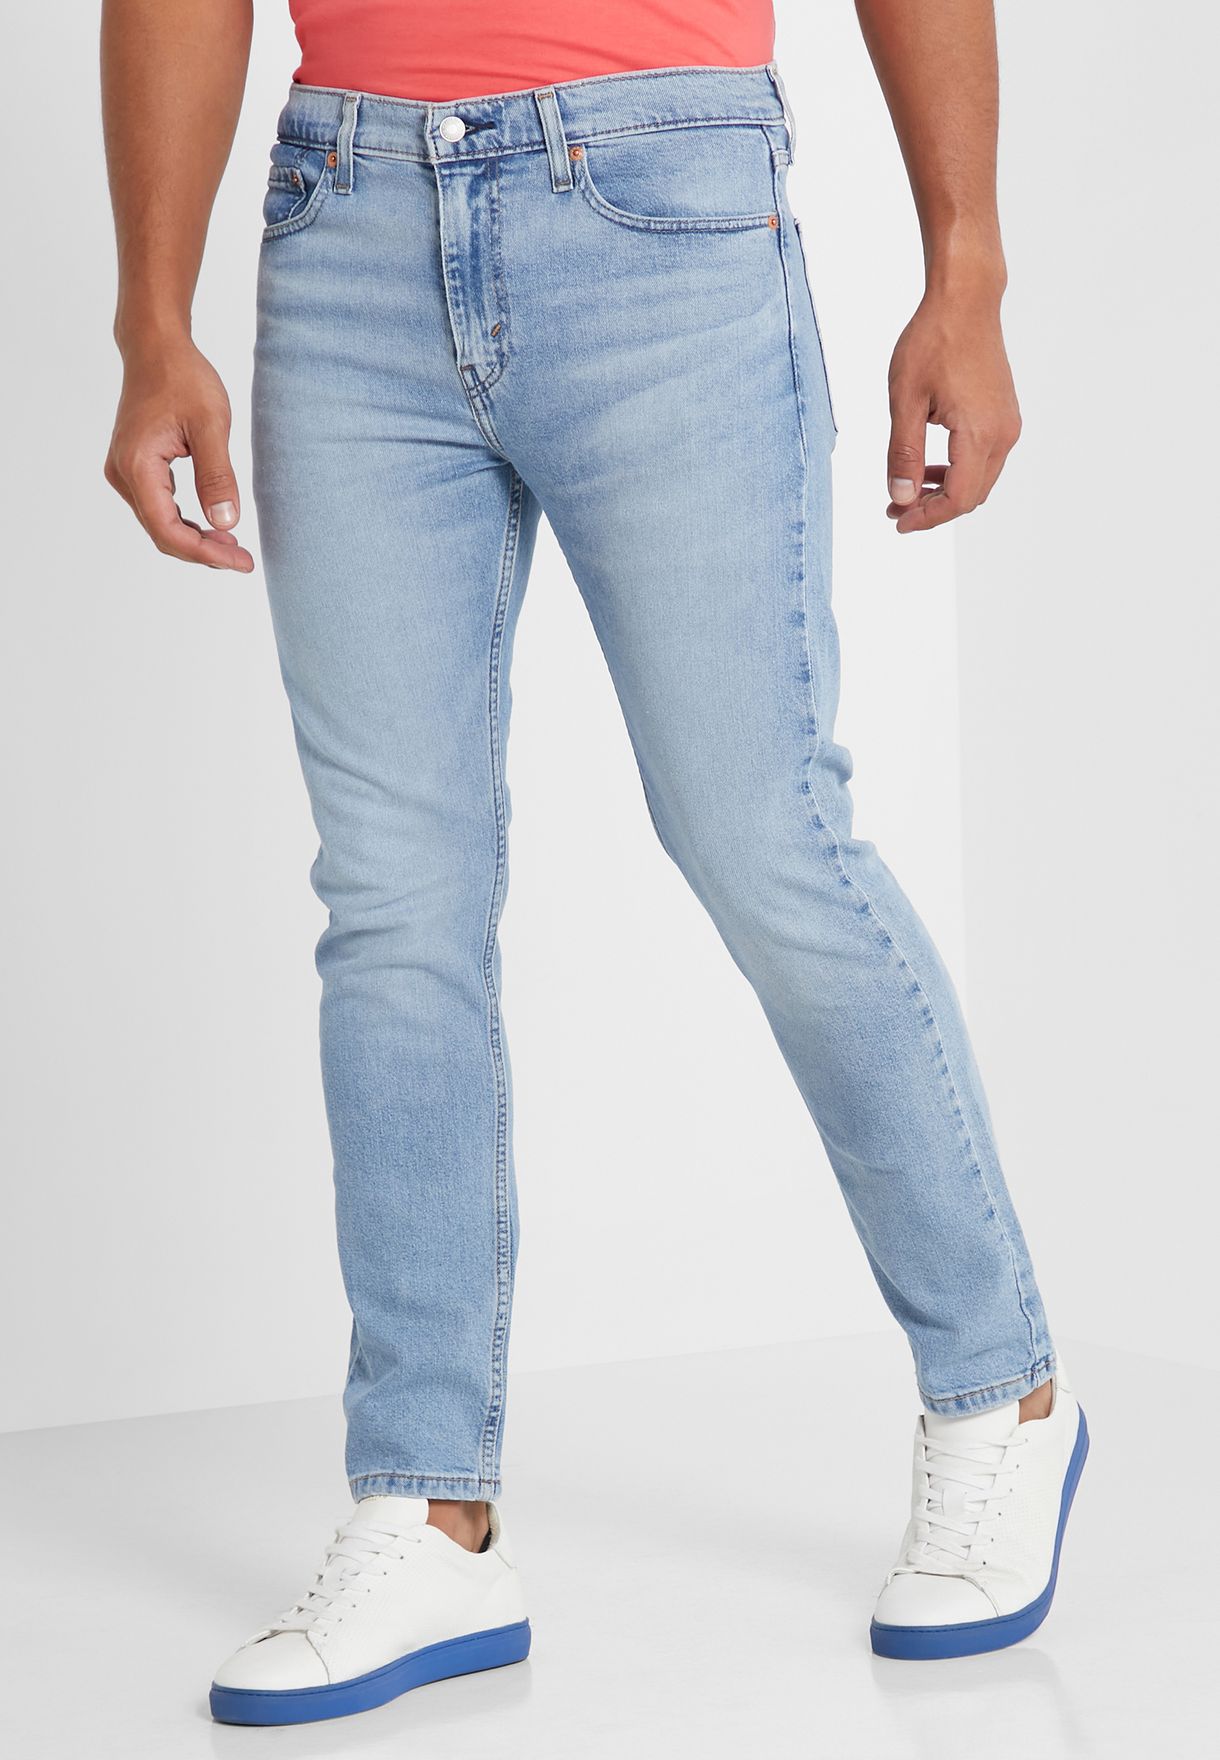 Buy Levis blue Light Wash Skinny Fit Jeans for Men in Dubai, Abu Dhabi